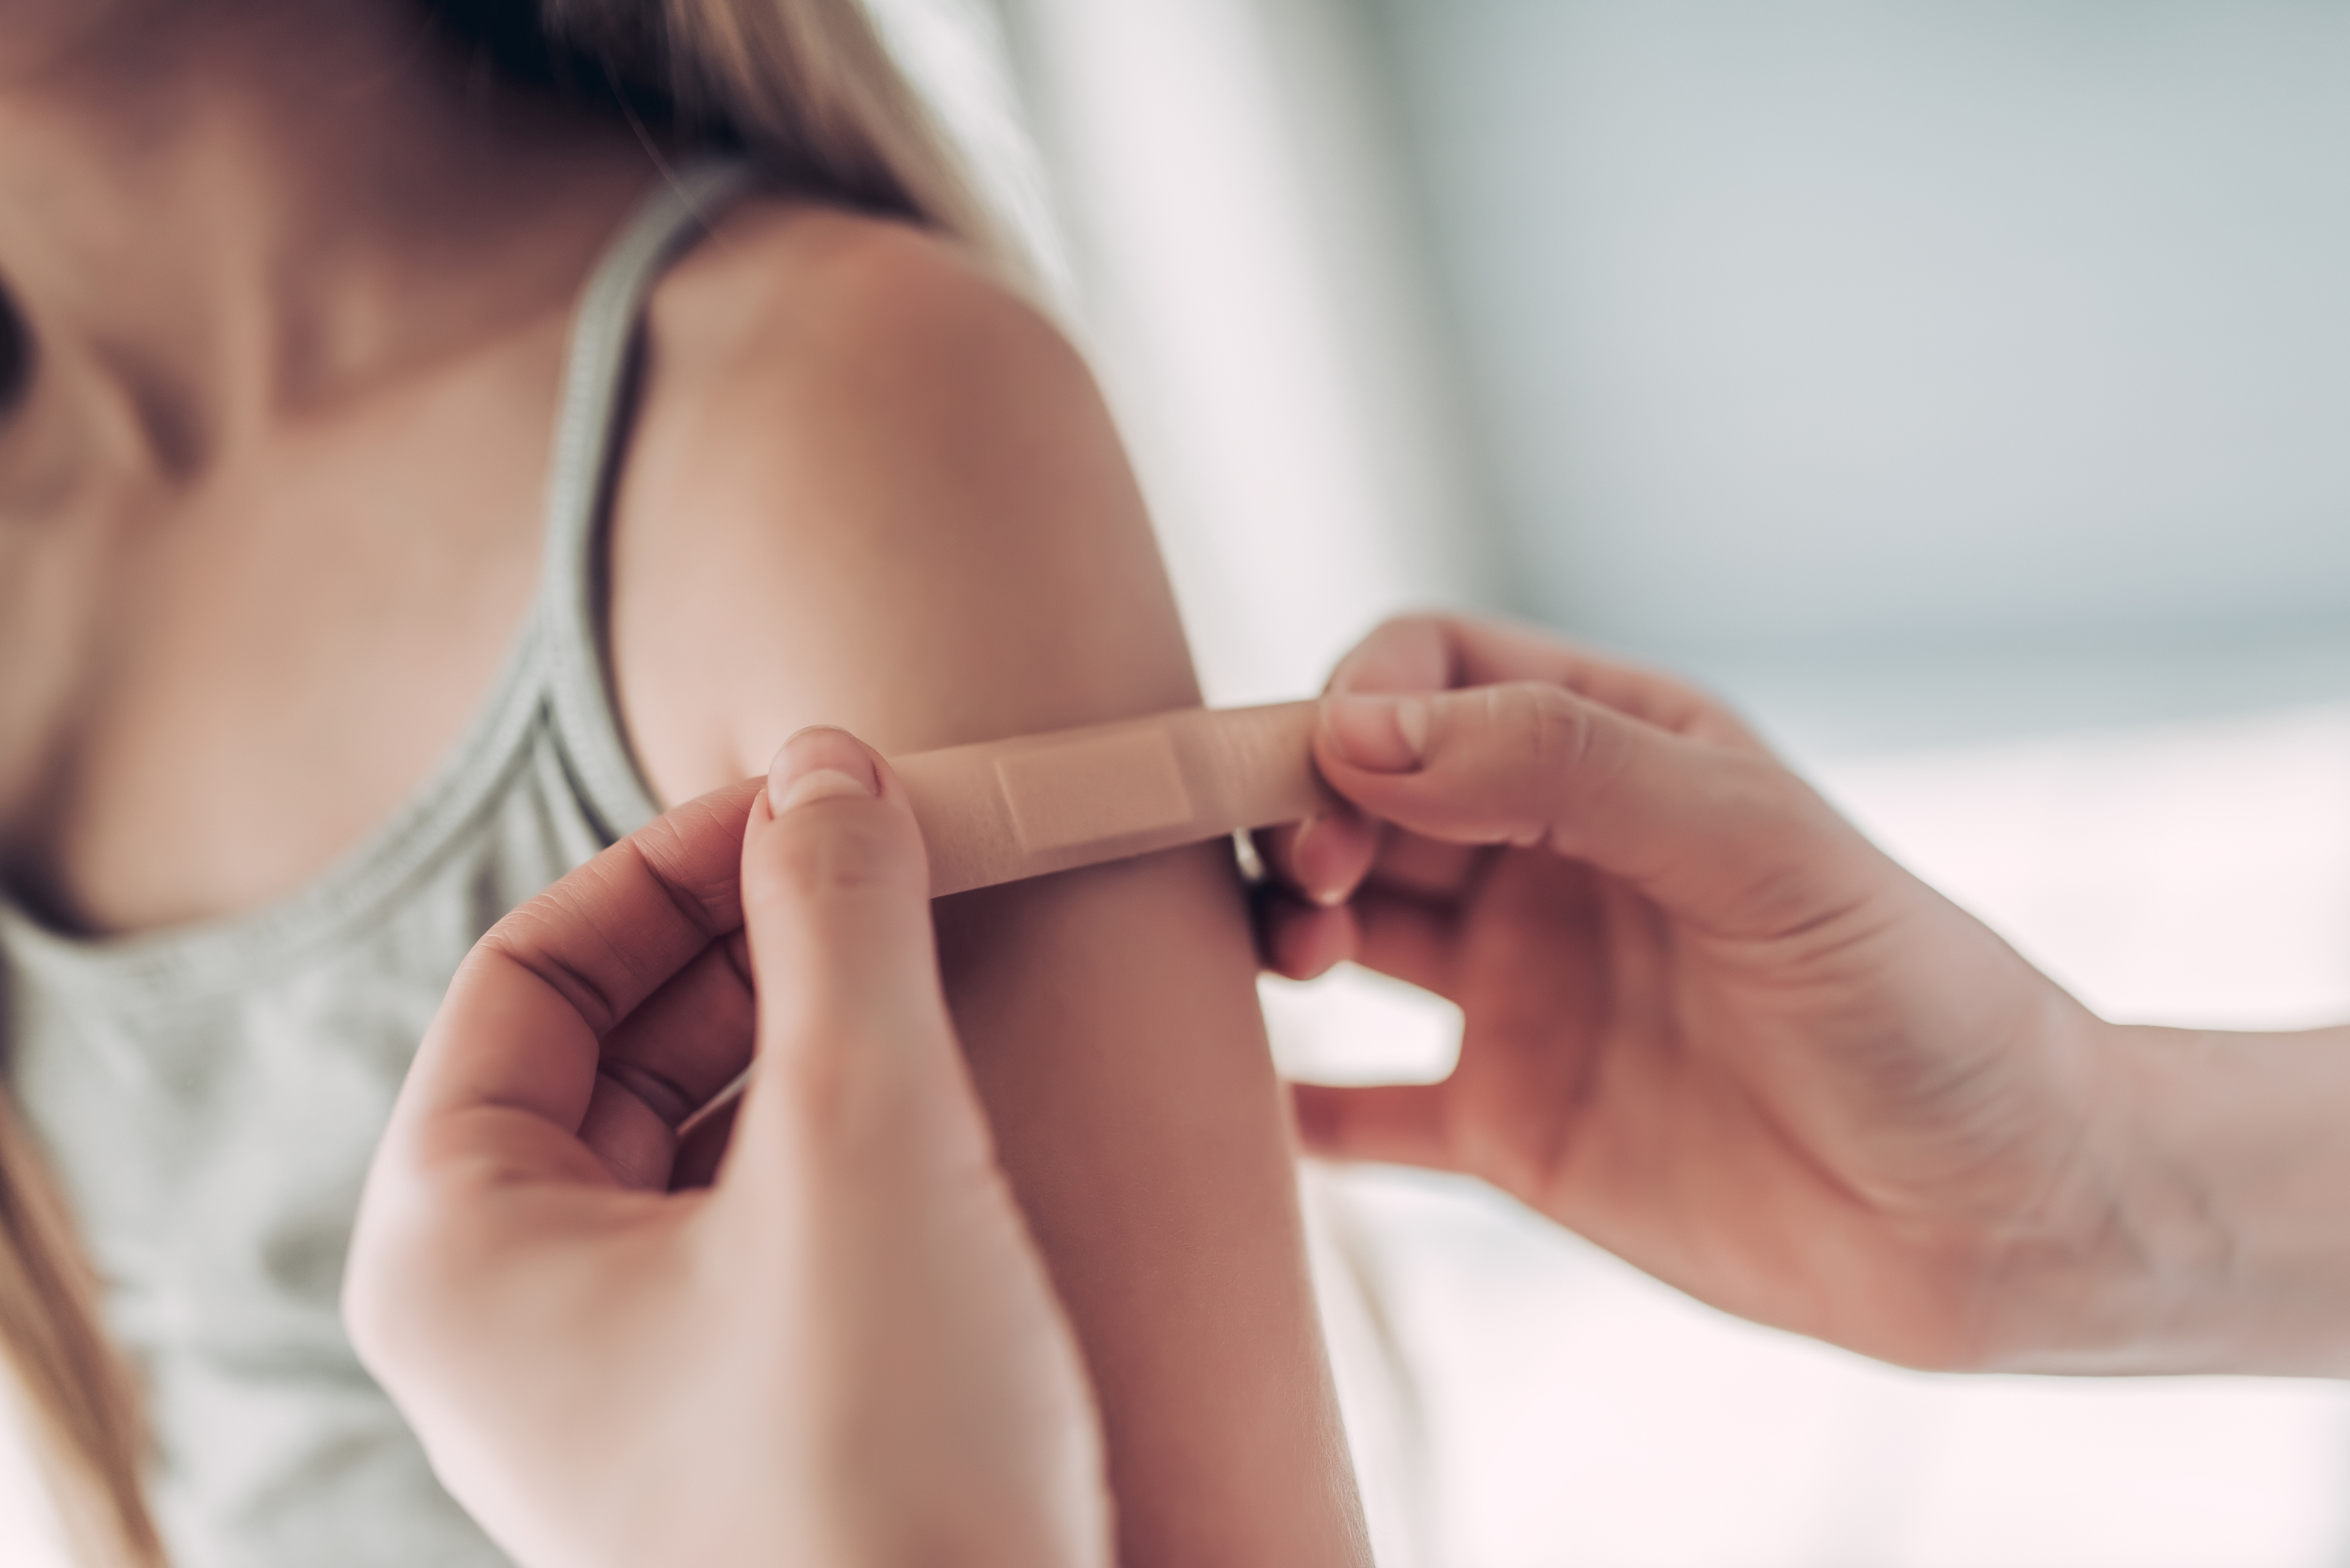 Child arm vaccine band-aid